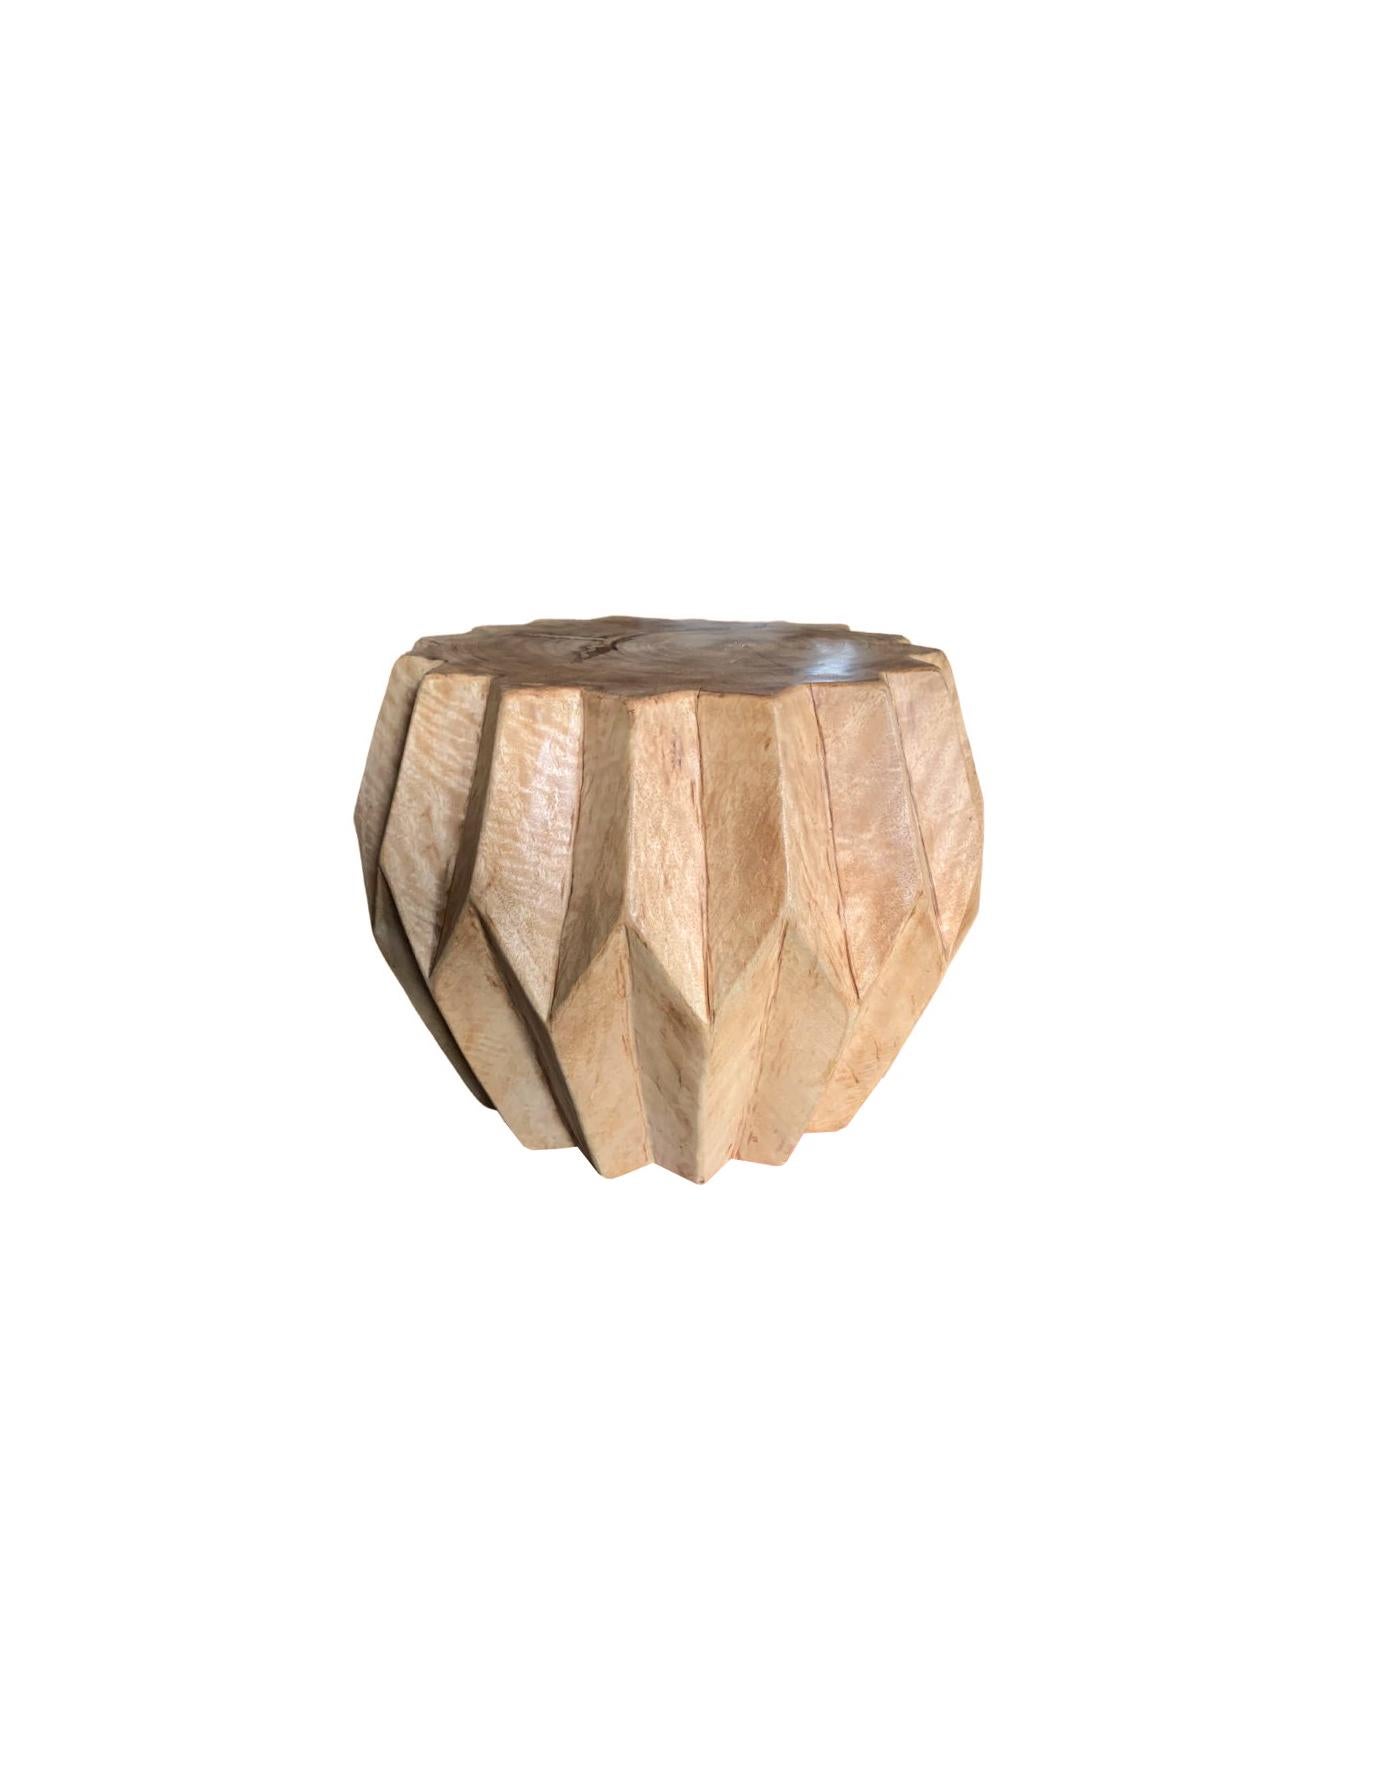 Organic Modern Geometric Solid Mango Wood Table For Sale